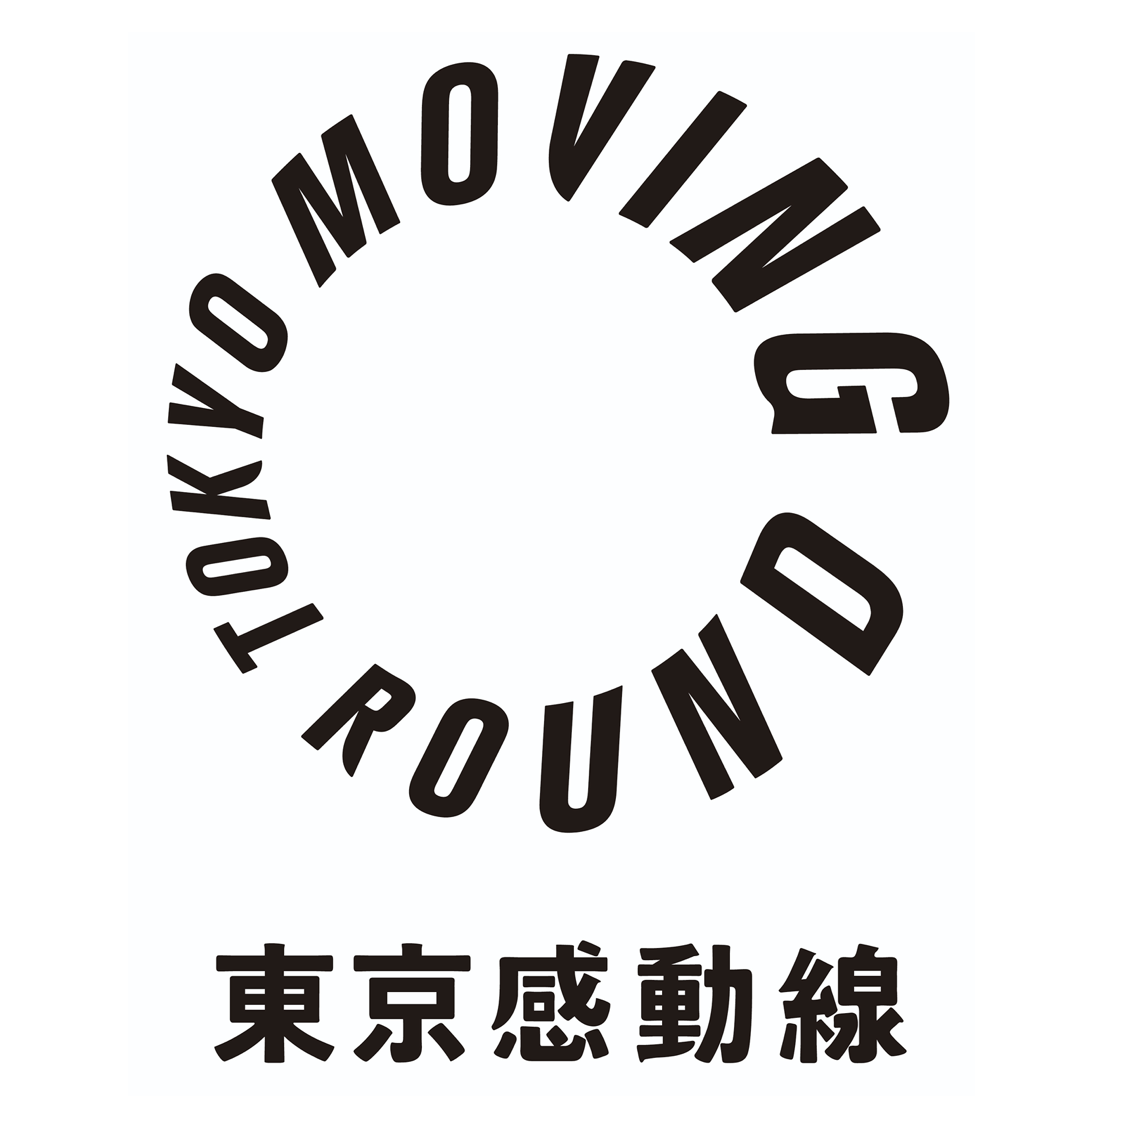 Tokyo Moving Round